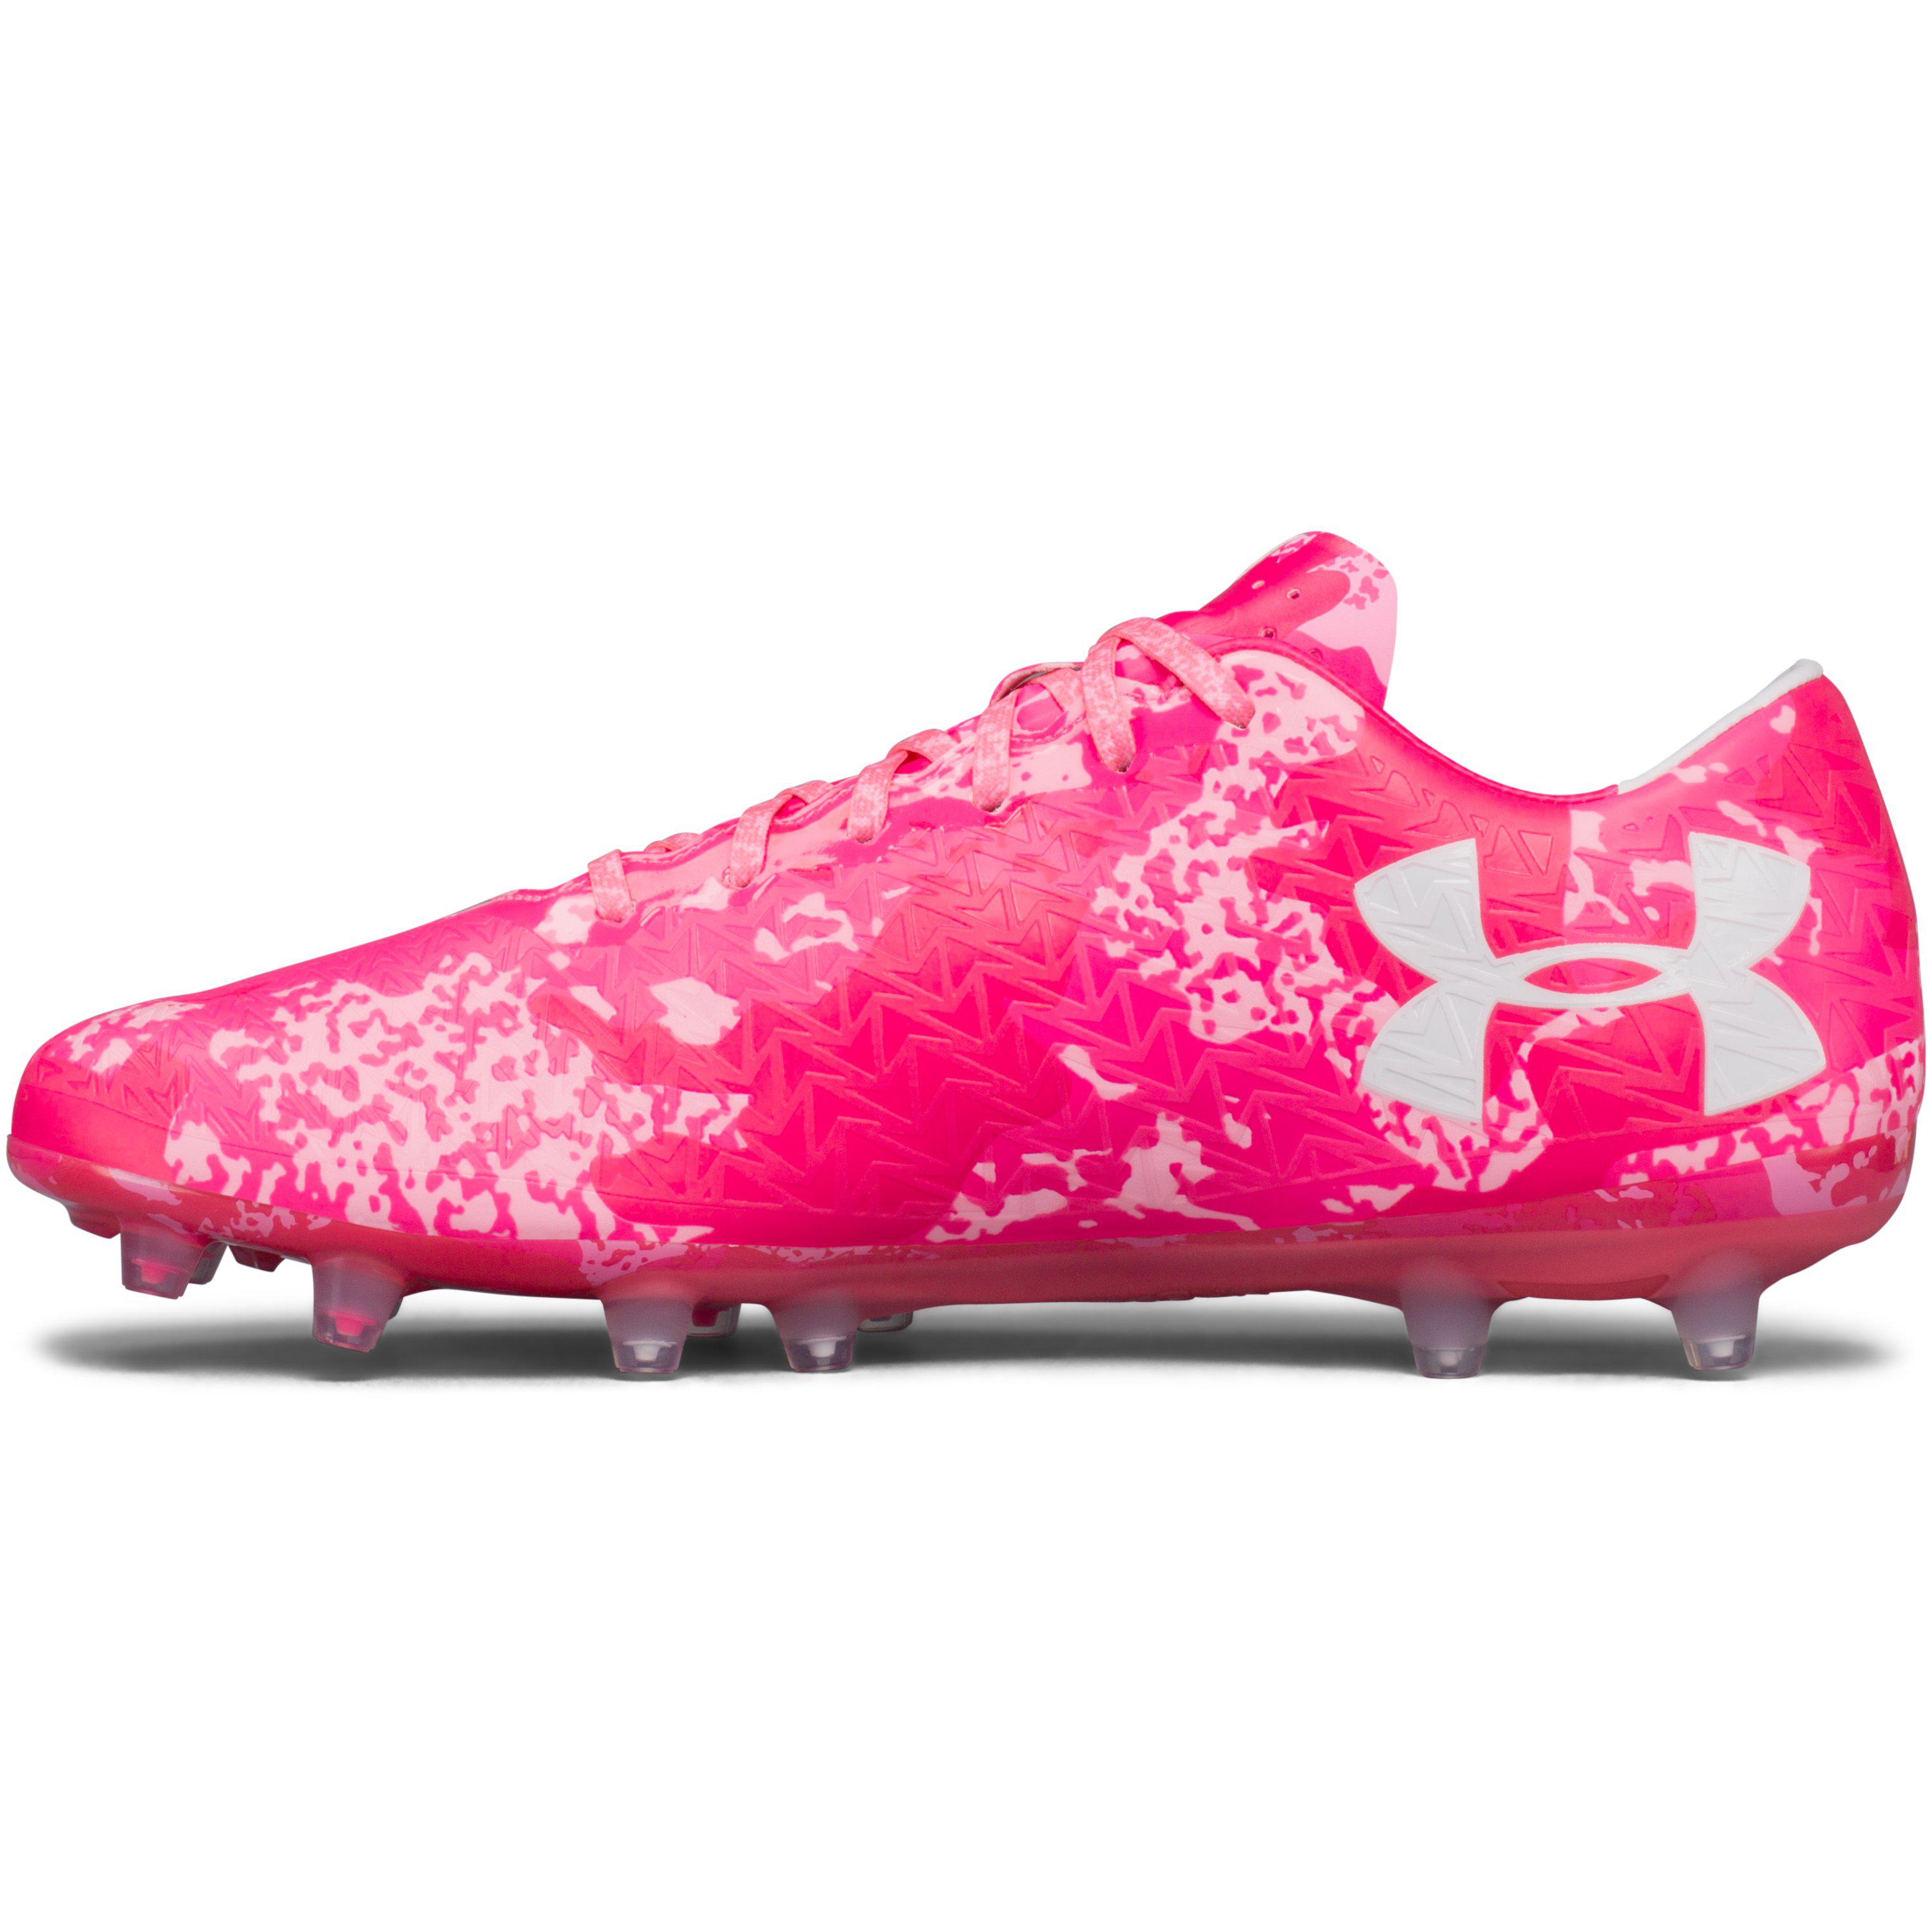 1297548-661 Under Armour Clutchfit Force 3.0 FG Soccer Cleats Pink Craze BCA 